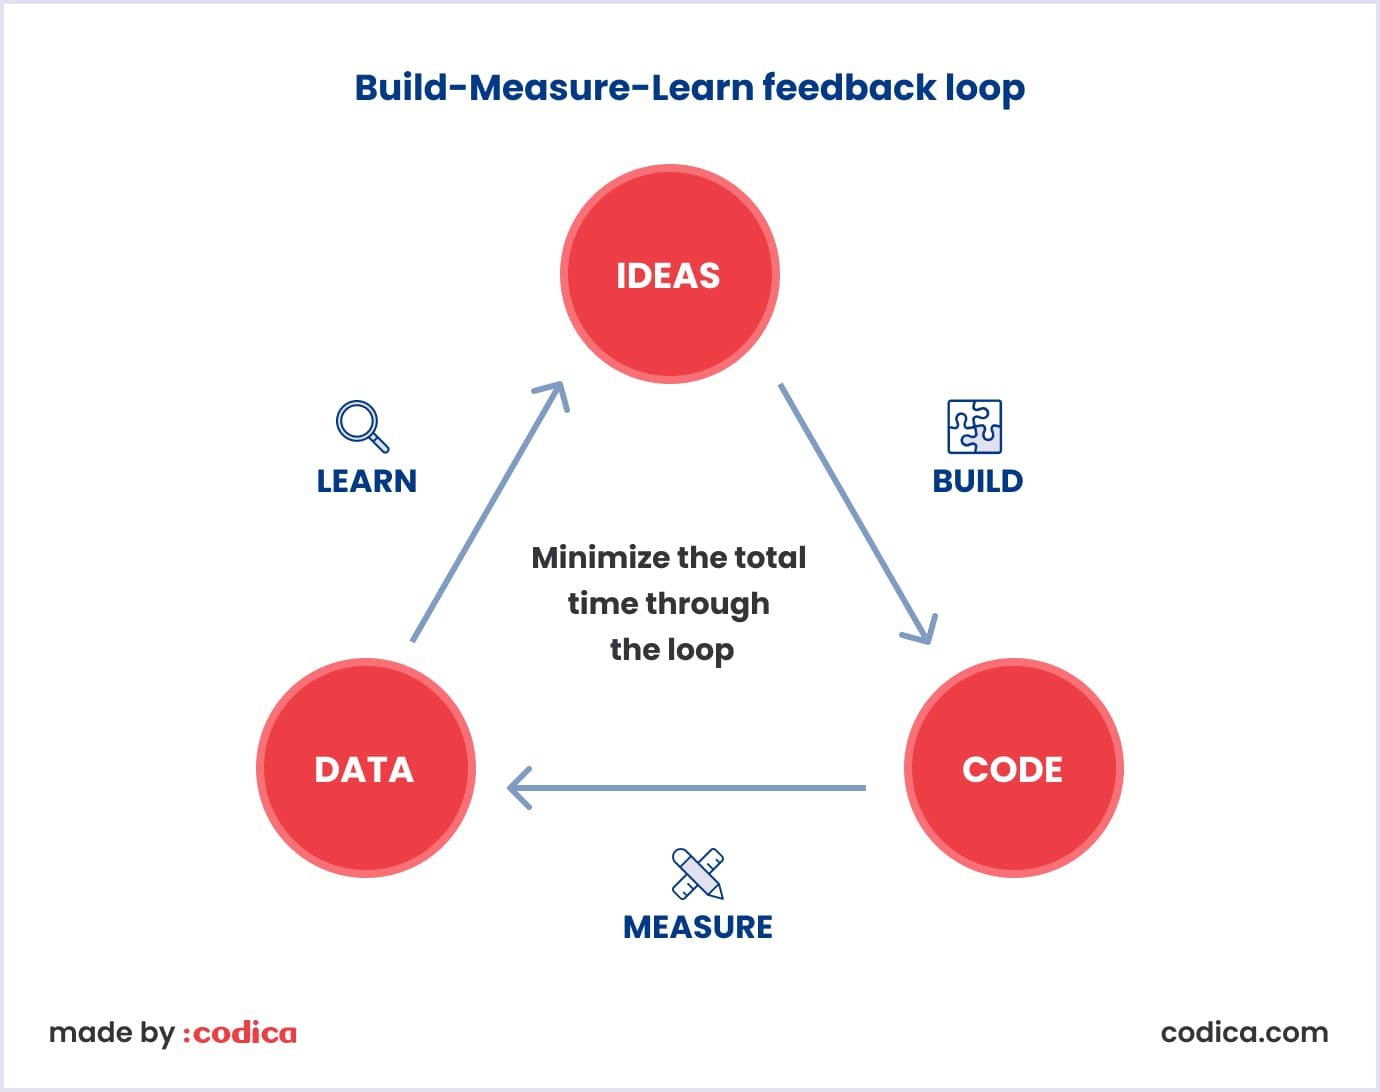 Build-Measure-Learn principle explained